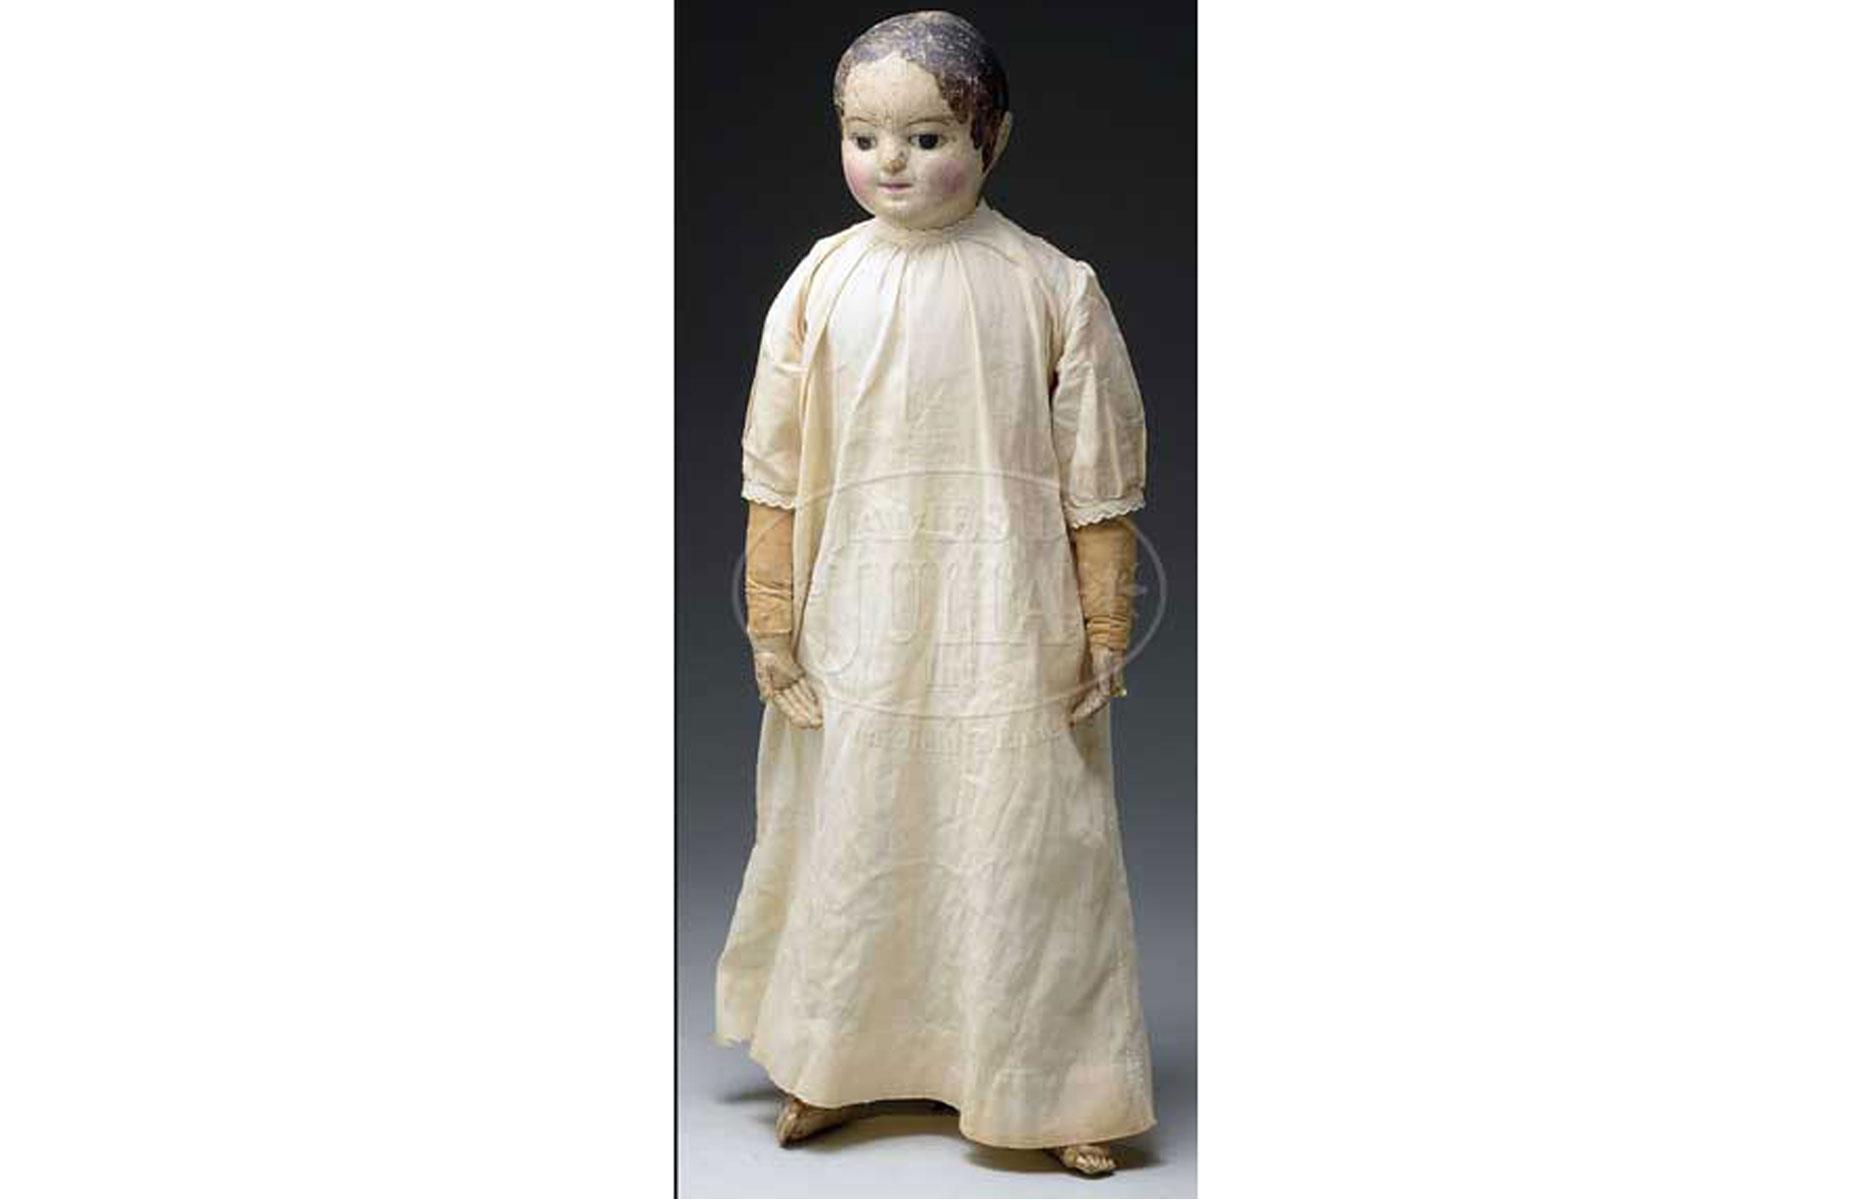 A 19th-century doll